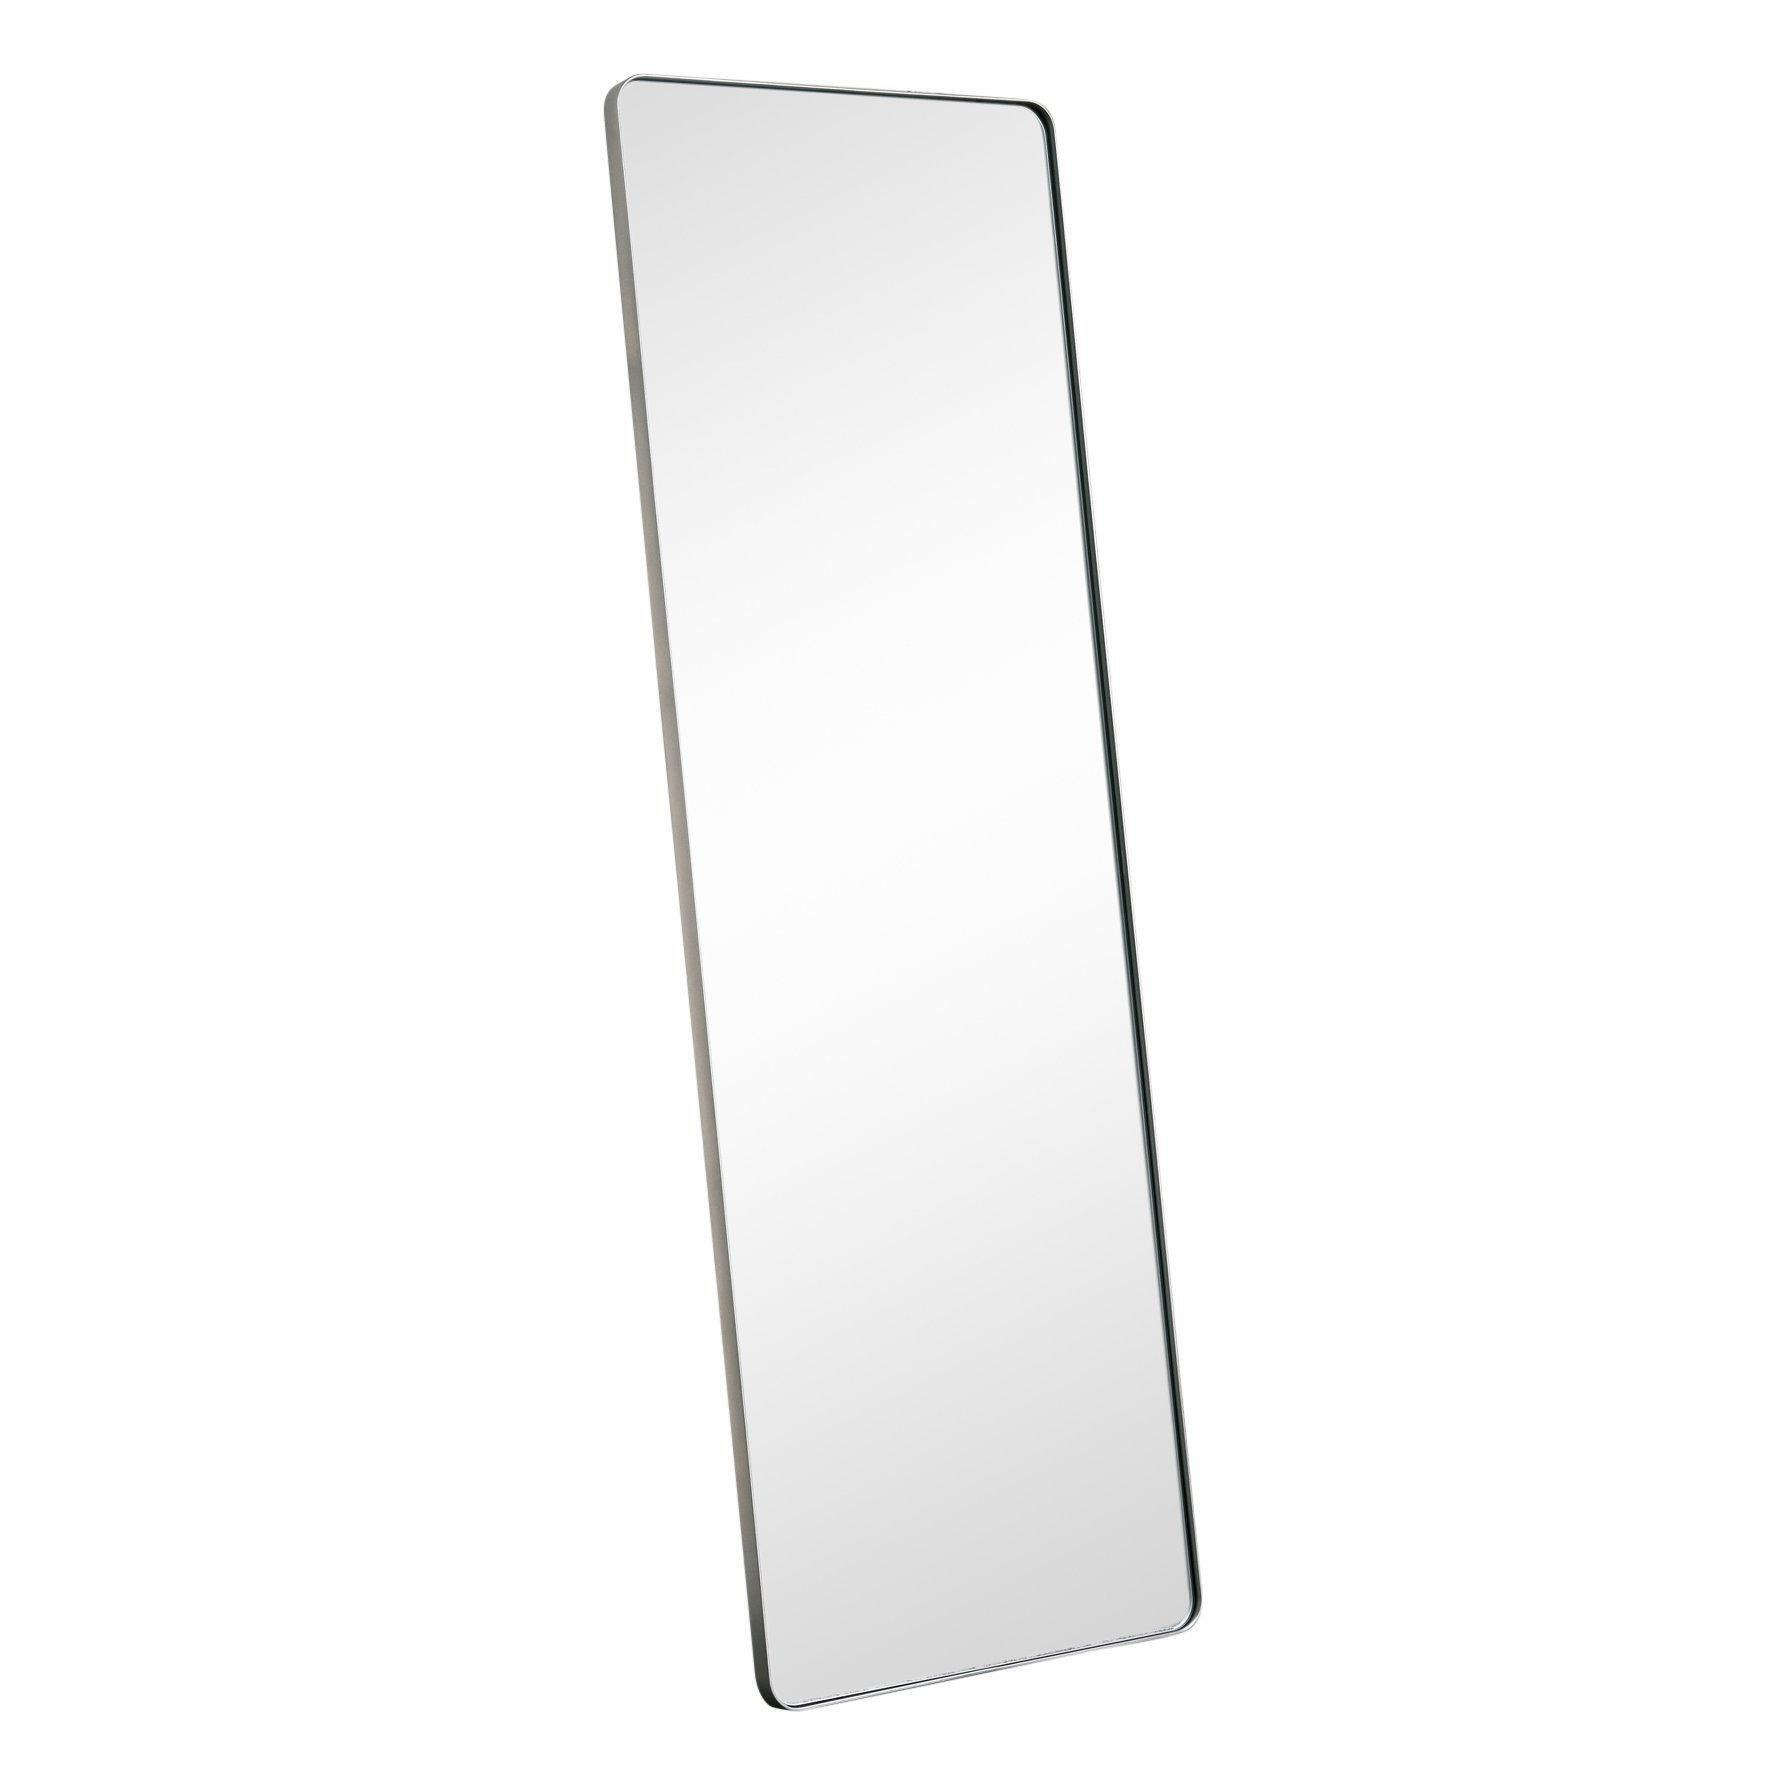 Tall Silver Thin Framed Wall / Floor / Leaner Mirror 47cm X 142cm - image 1